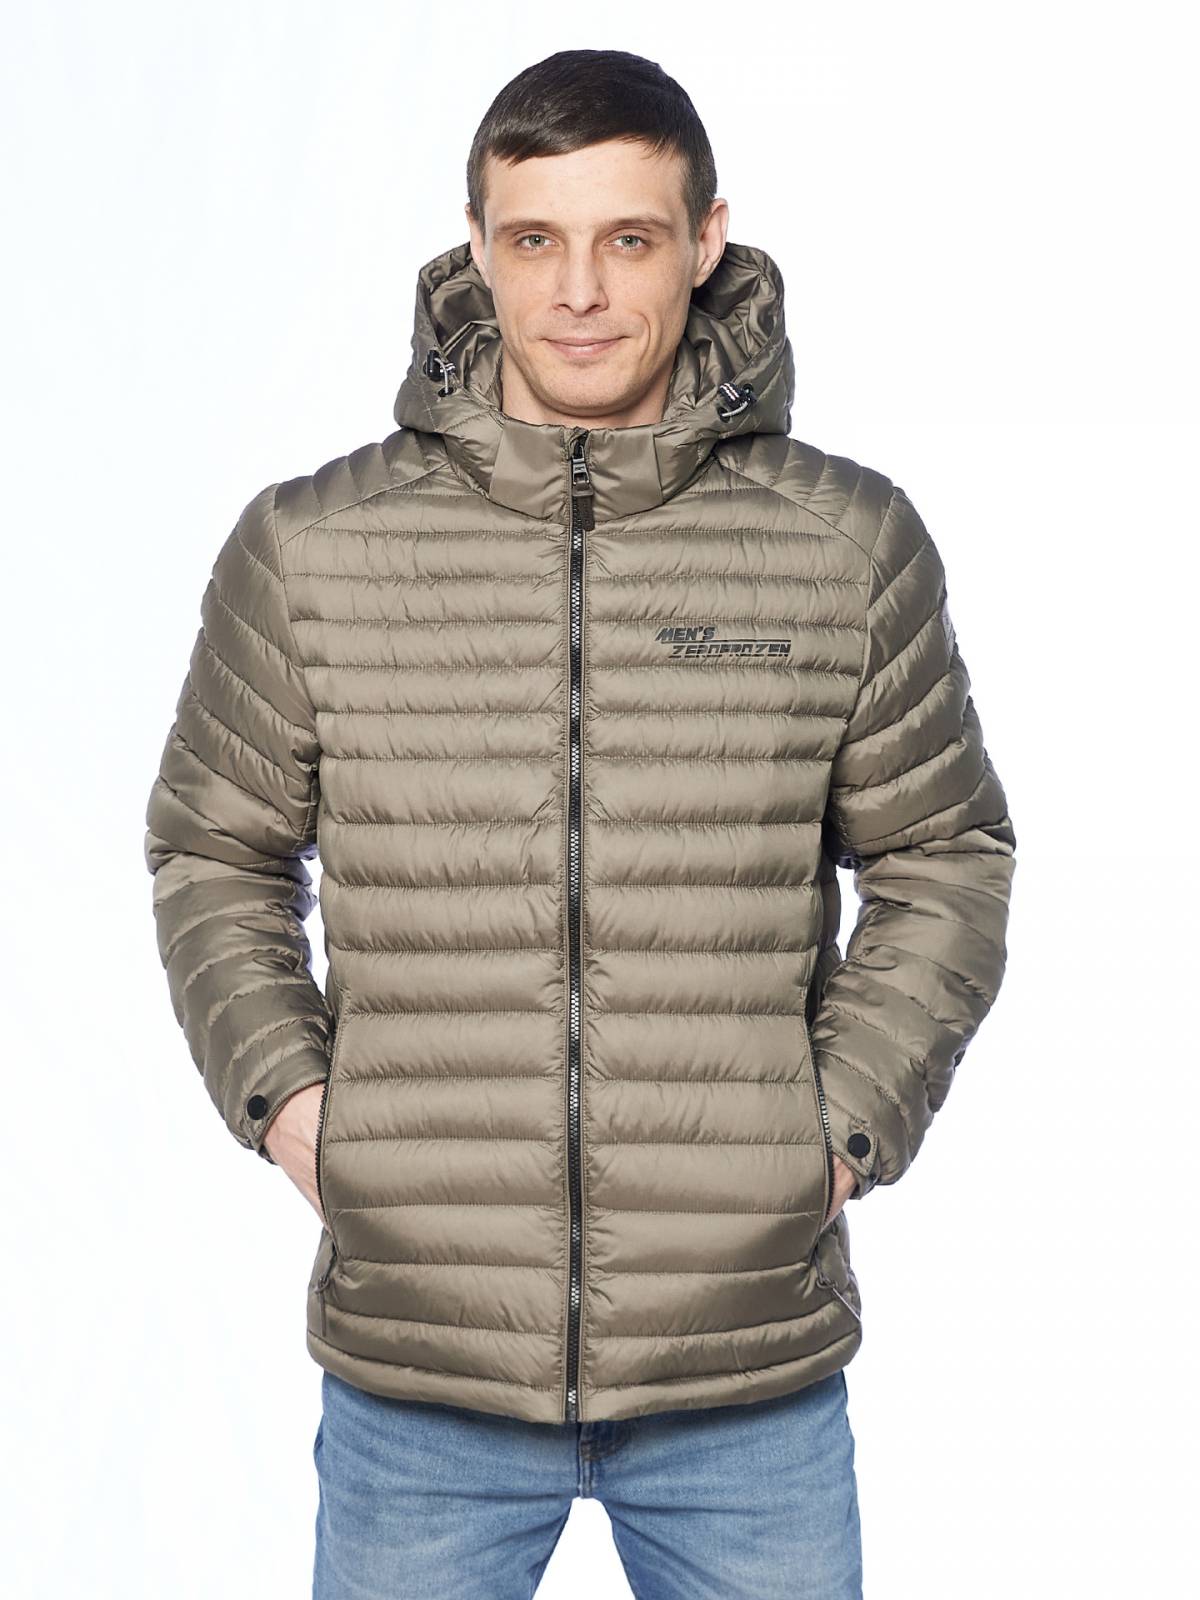 Куртка мужская Zero Frozen 4225 бежевая 56 RU